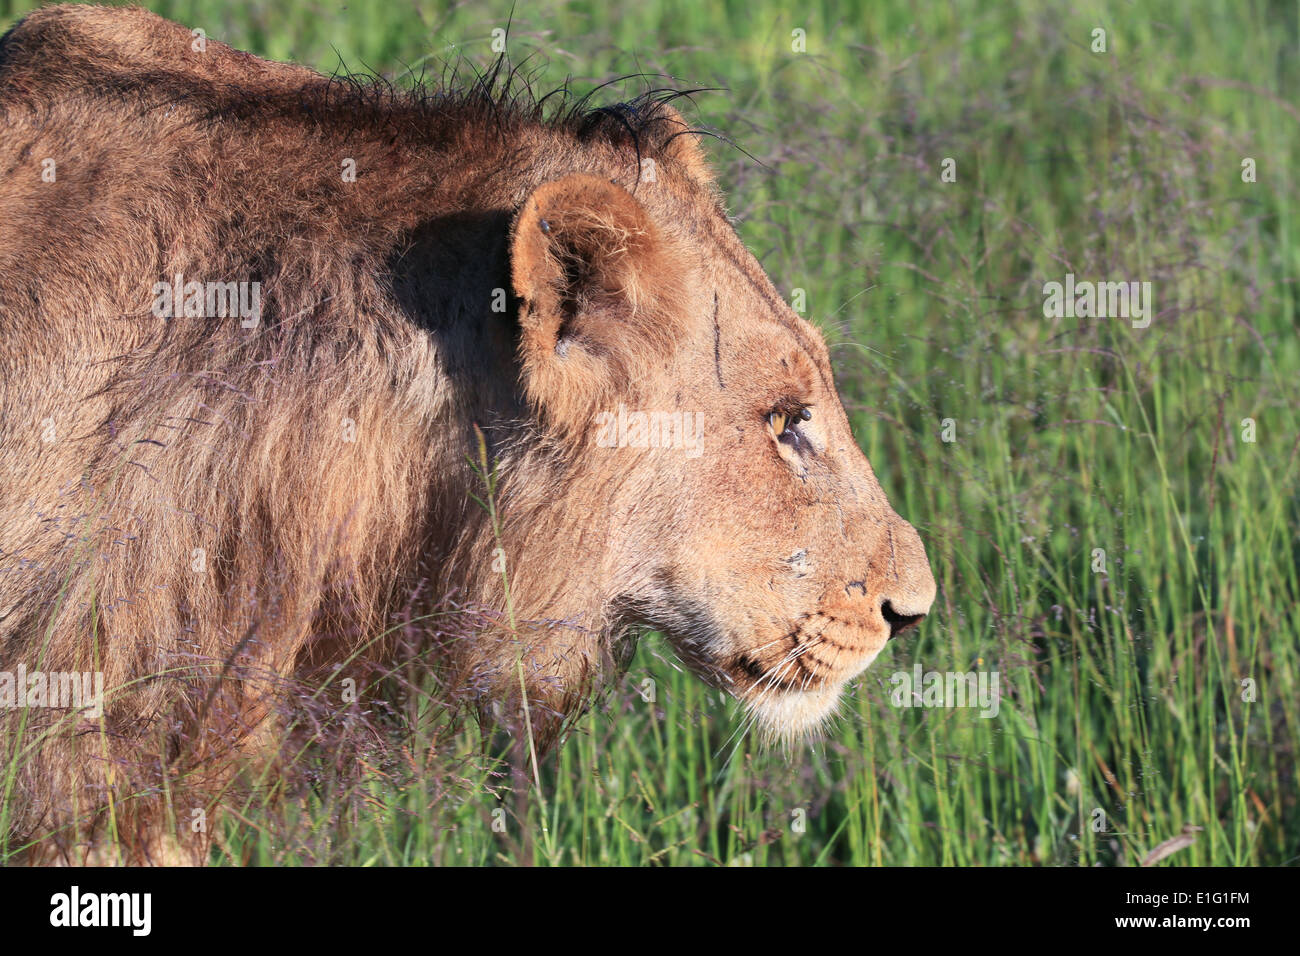 Young lion, close-up side portrait, Sabi Sands Game Reserve, Kruger National Park, South Africa. Stock Photo